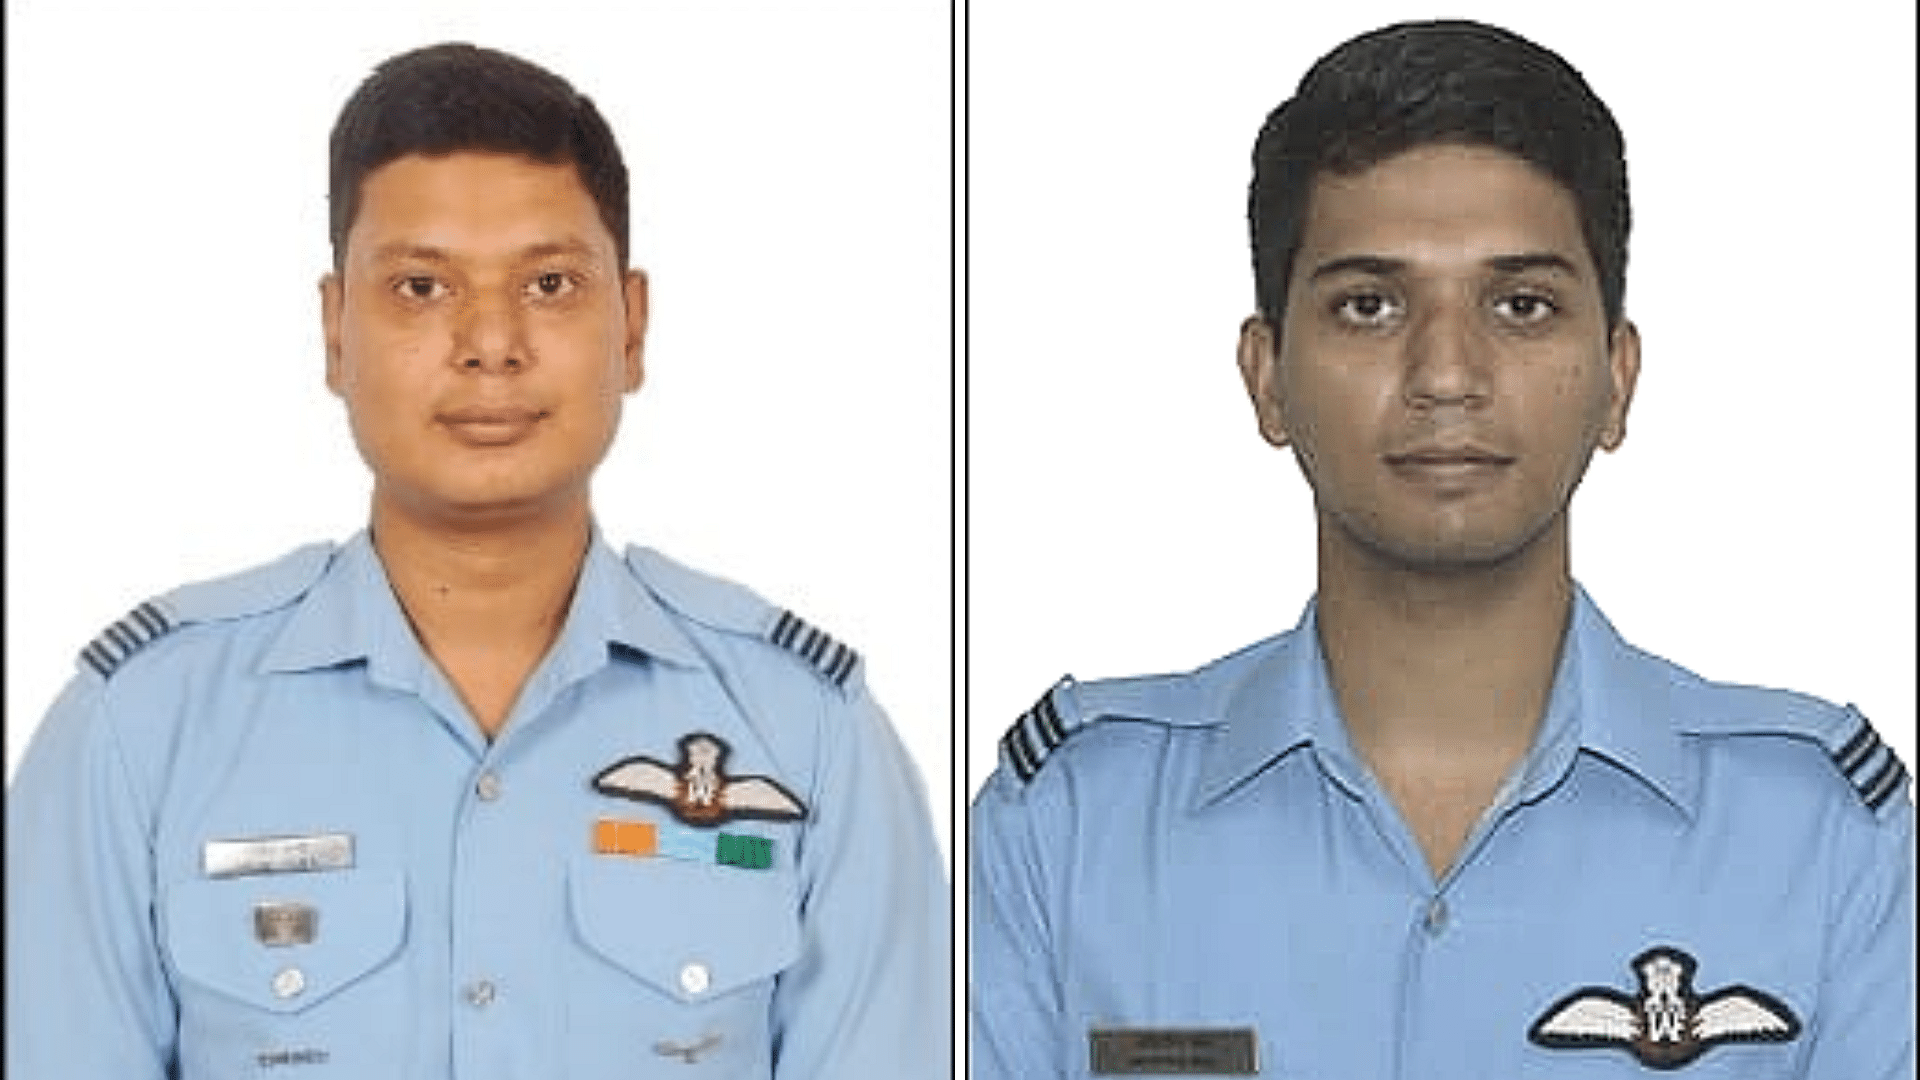 <div class="paragraphs"><p>Rajasthan IAG MiG-21 crash: The two deceased pilots have been identified as Wing Commander M Rana (left) from Mandi, Himachal Pradesh and Flight Lieutenant Advitiya Bal Advitiya Bal (right) from Jammu.</p></div>